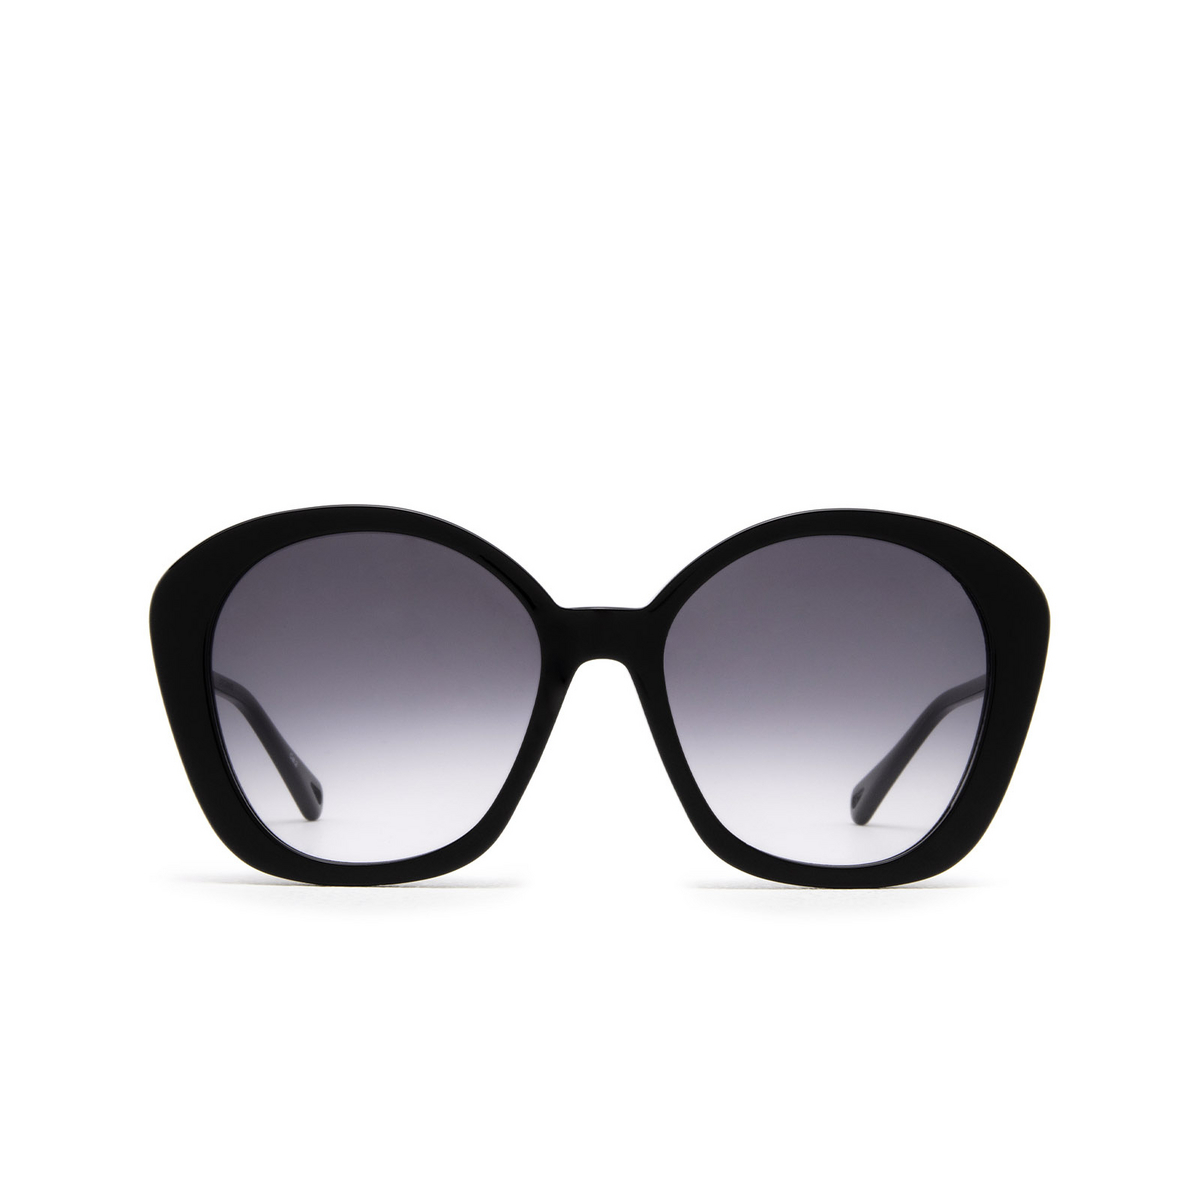 Chloé® Cat-eye Sunglasses: CH0081S color Black 005 - front view.